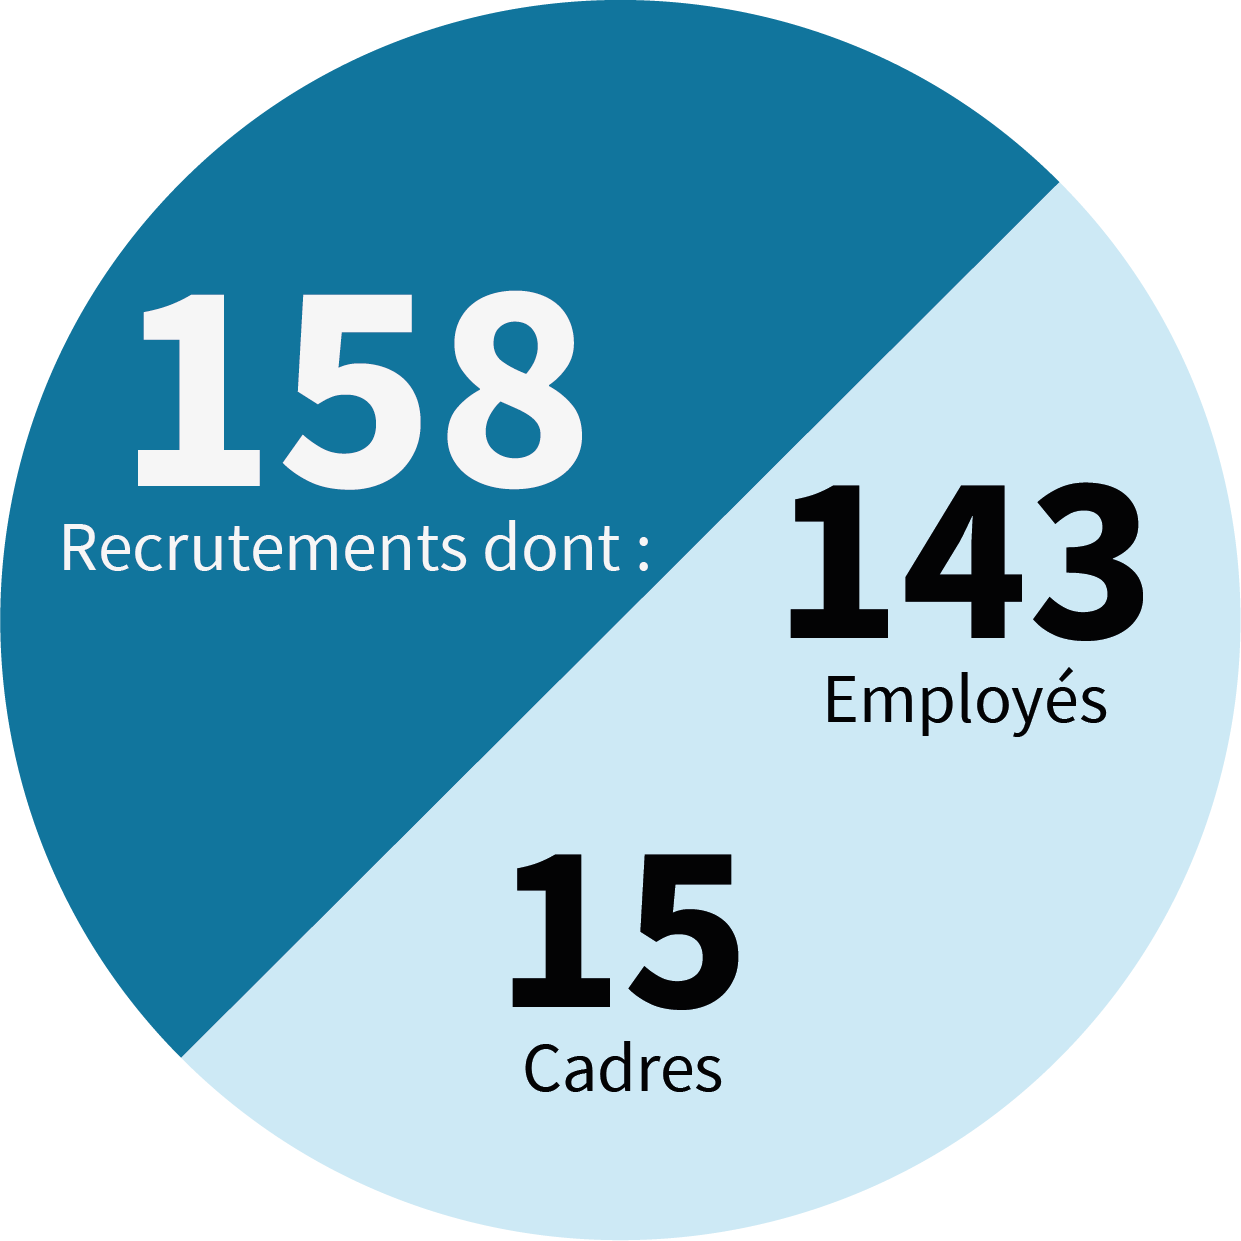 158 recrutements dont 143 employés et 15 cadres